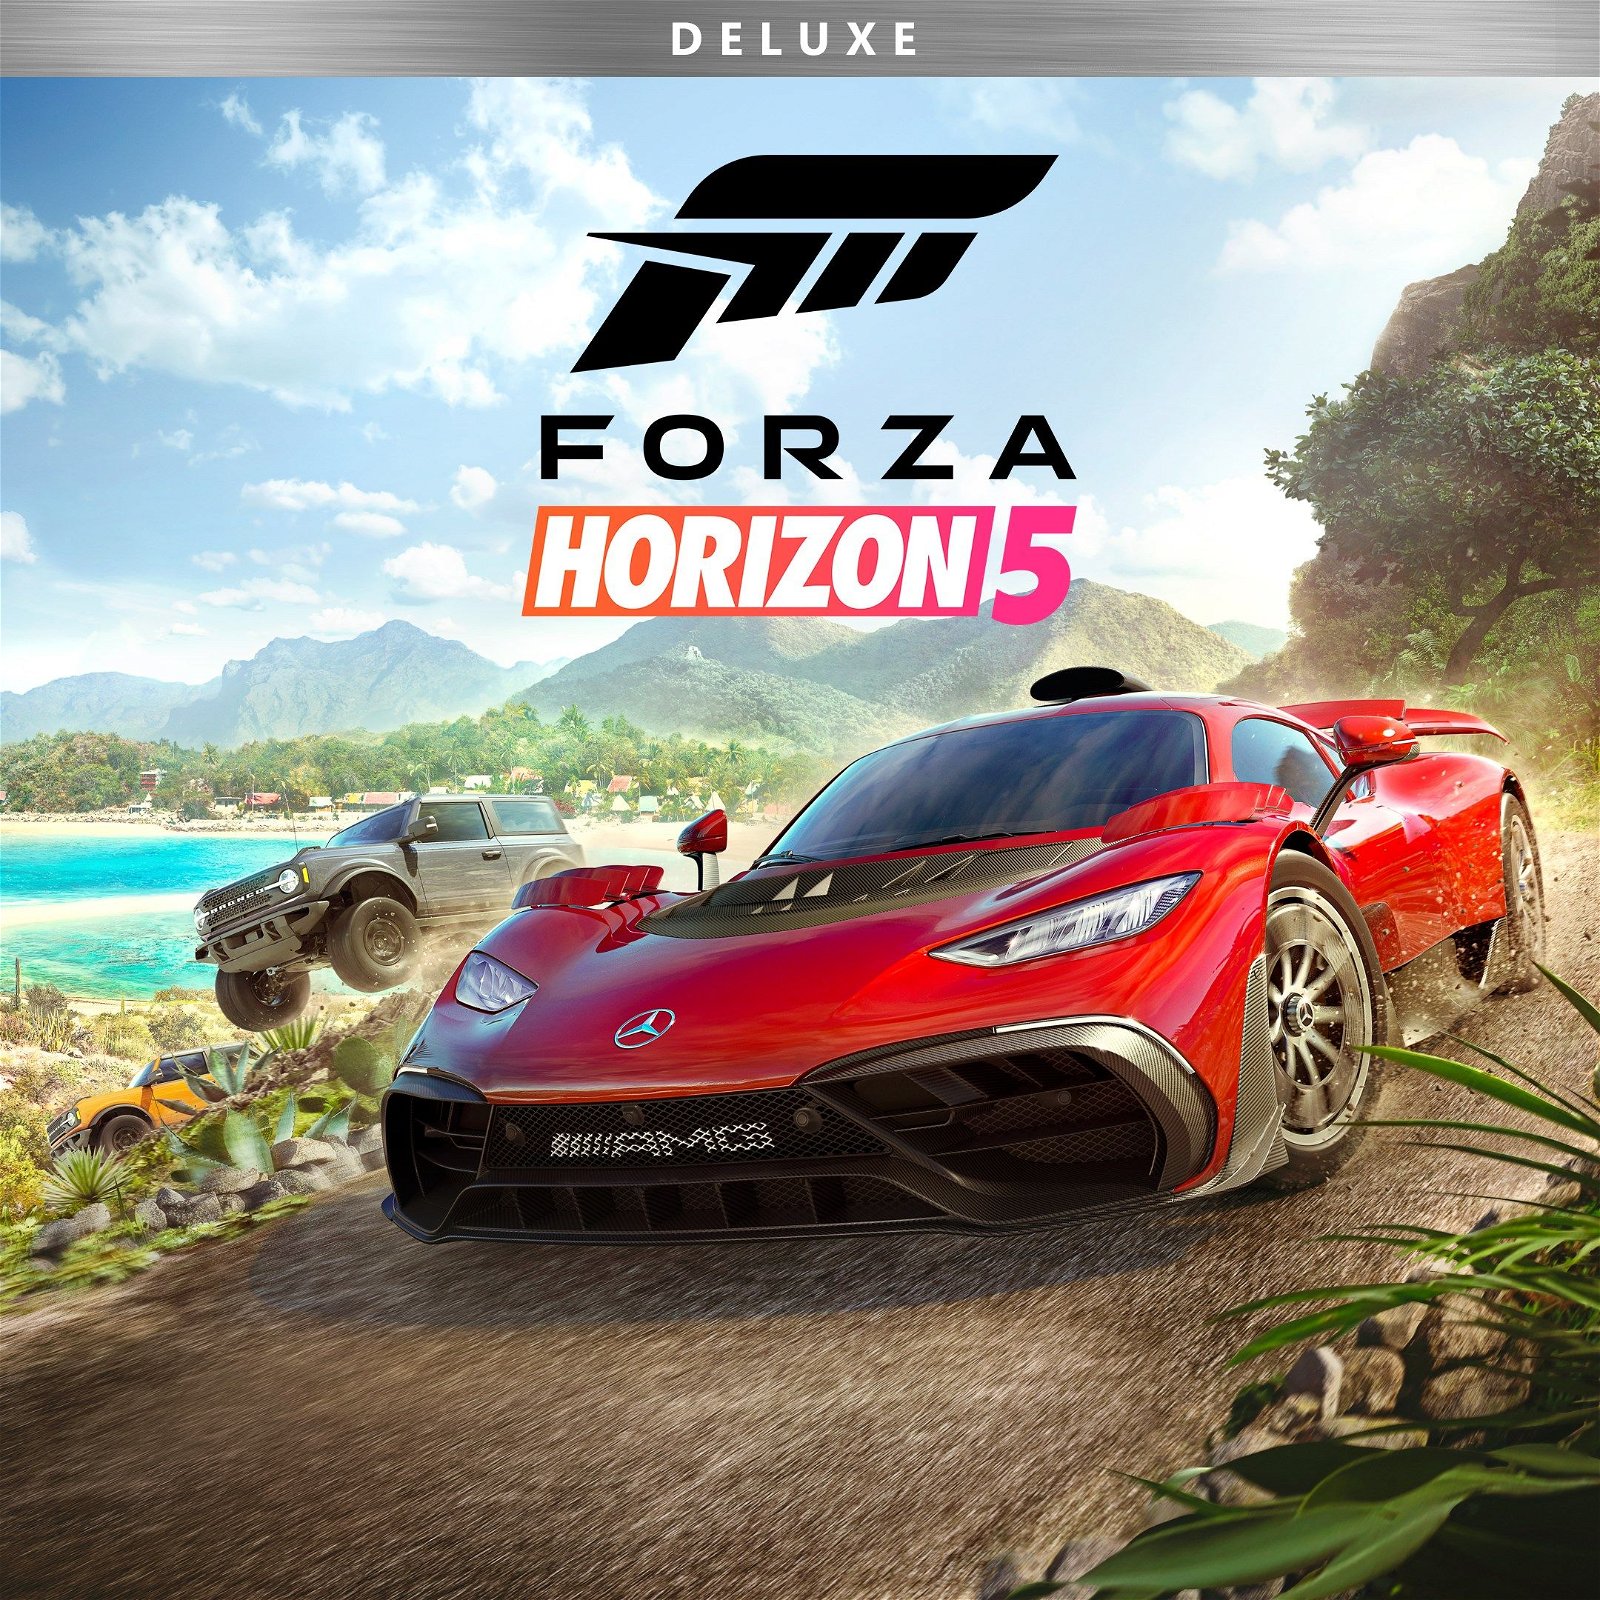 Image of Forza Horizon 5 Deluxe Edition